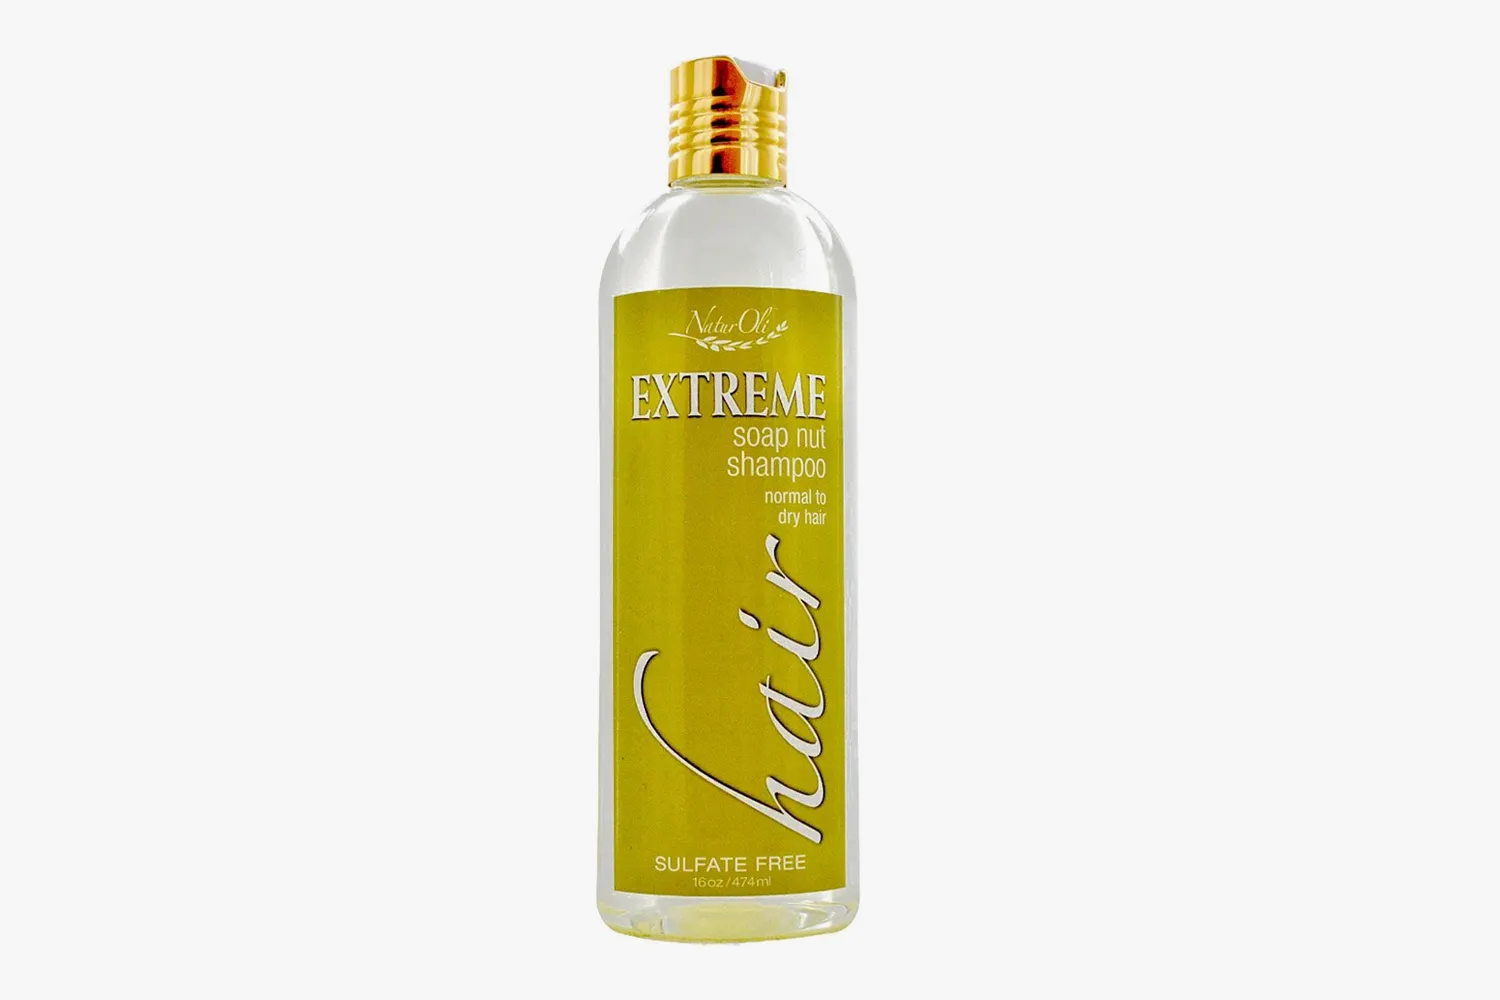 NaturOli Extreme Hair Soap Nut Shampoo